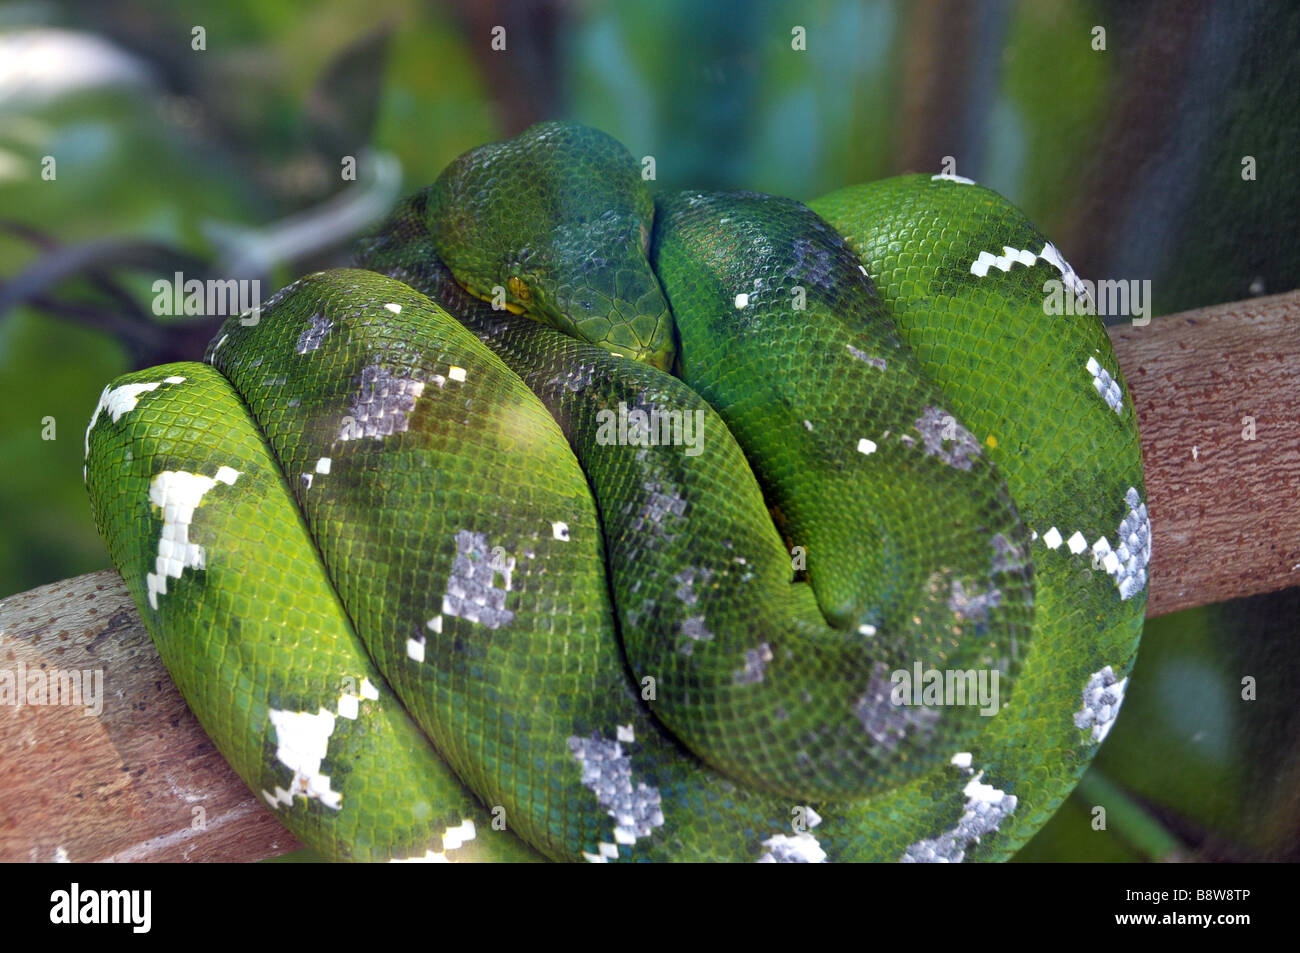 Green Tree python au repos. Banque D'Images